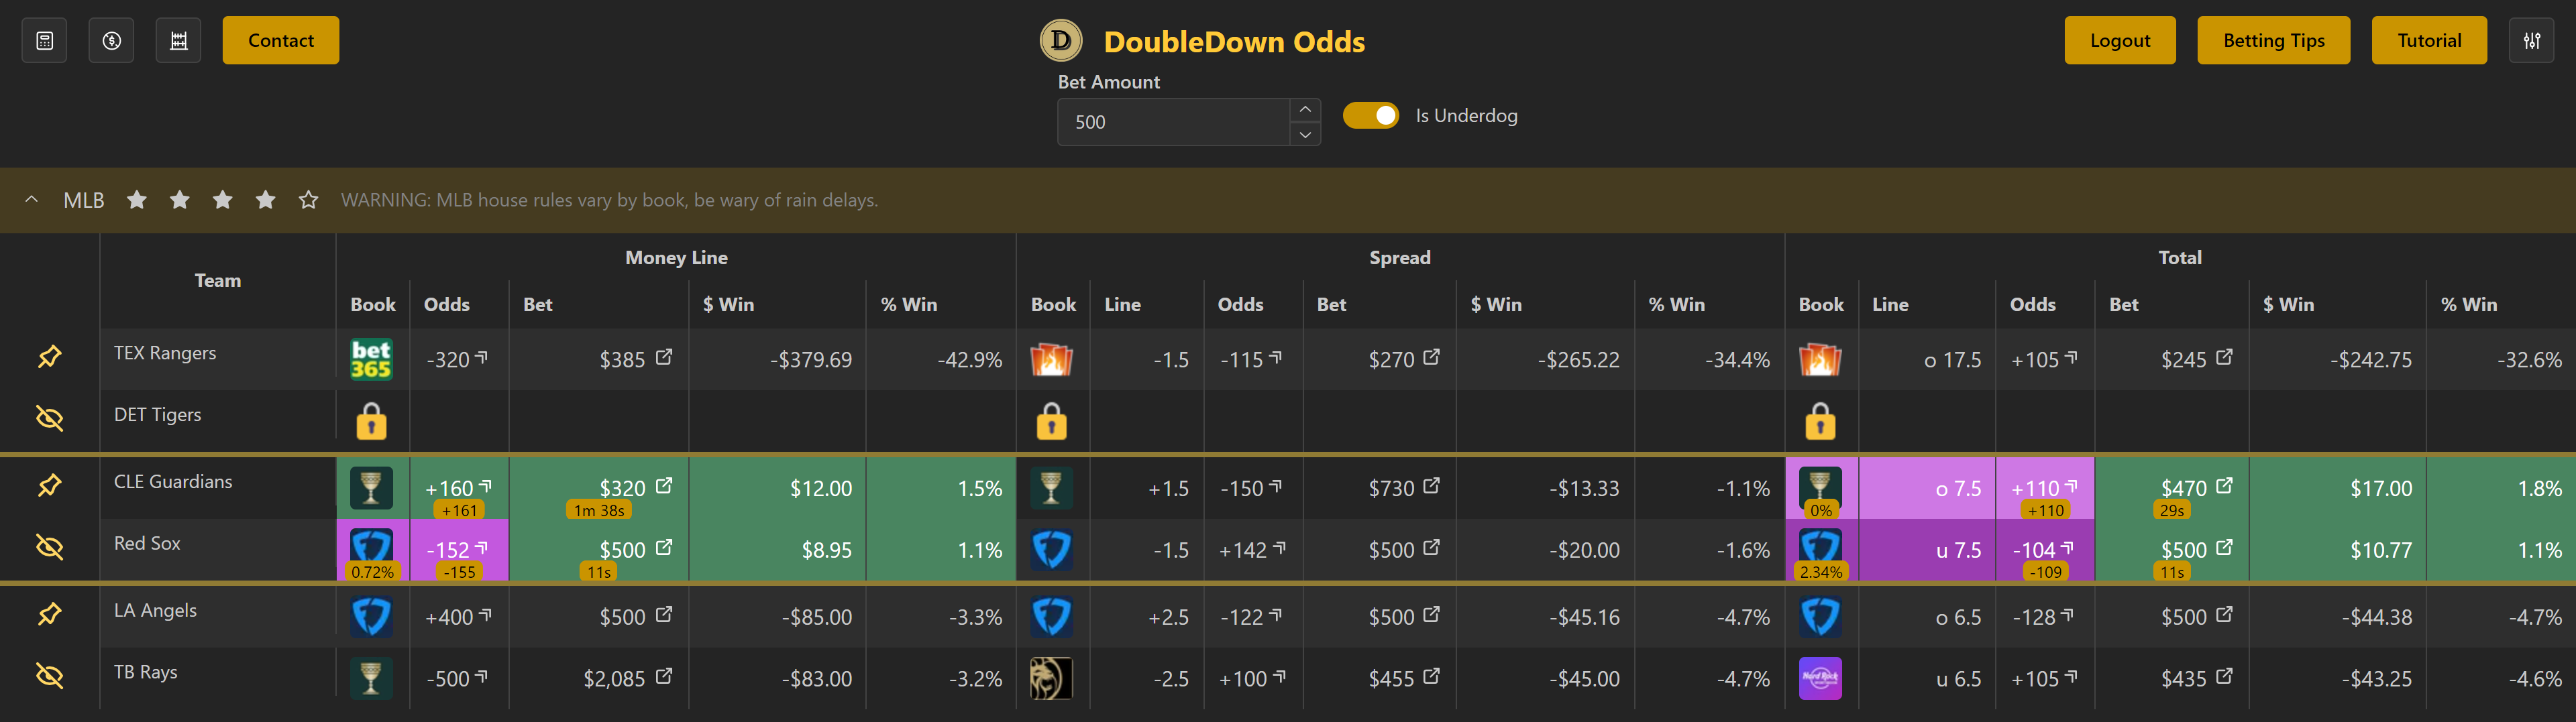 Screenshot of Double Down Odds